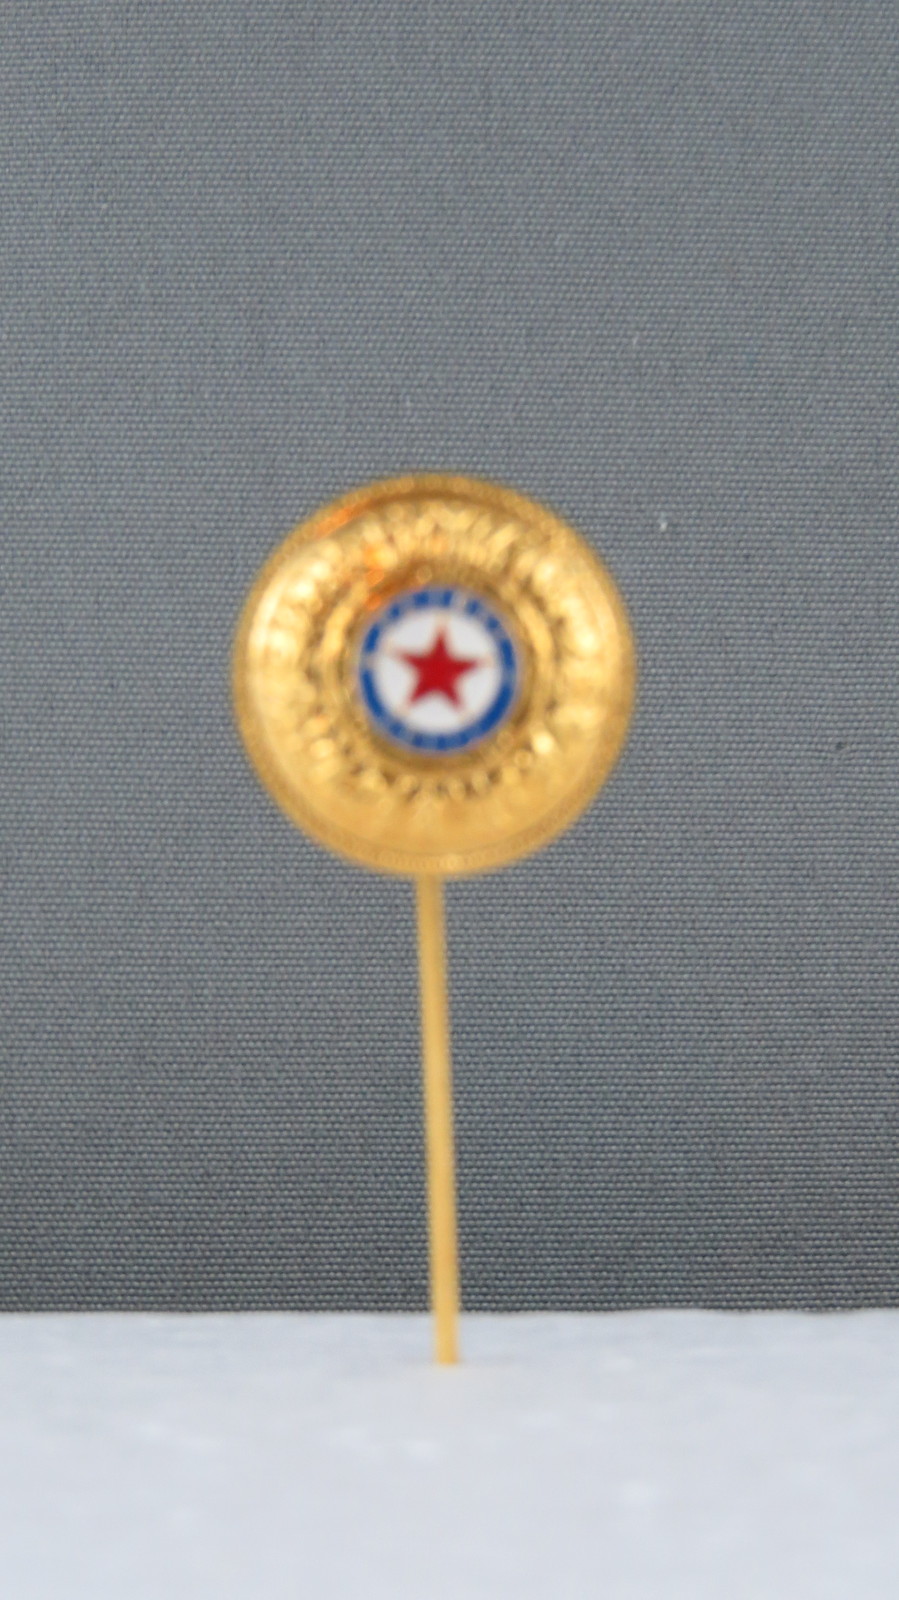 Primary image for Vintage HNK Hajduk Split Football/Soccer Club Lapel Pin - Golden Pin